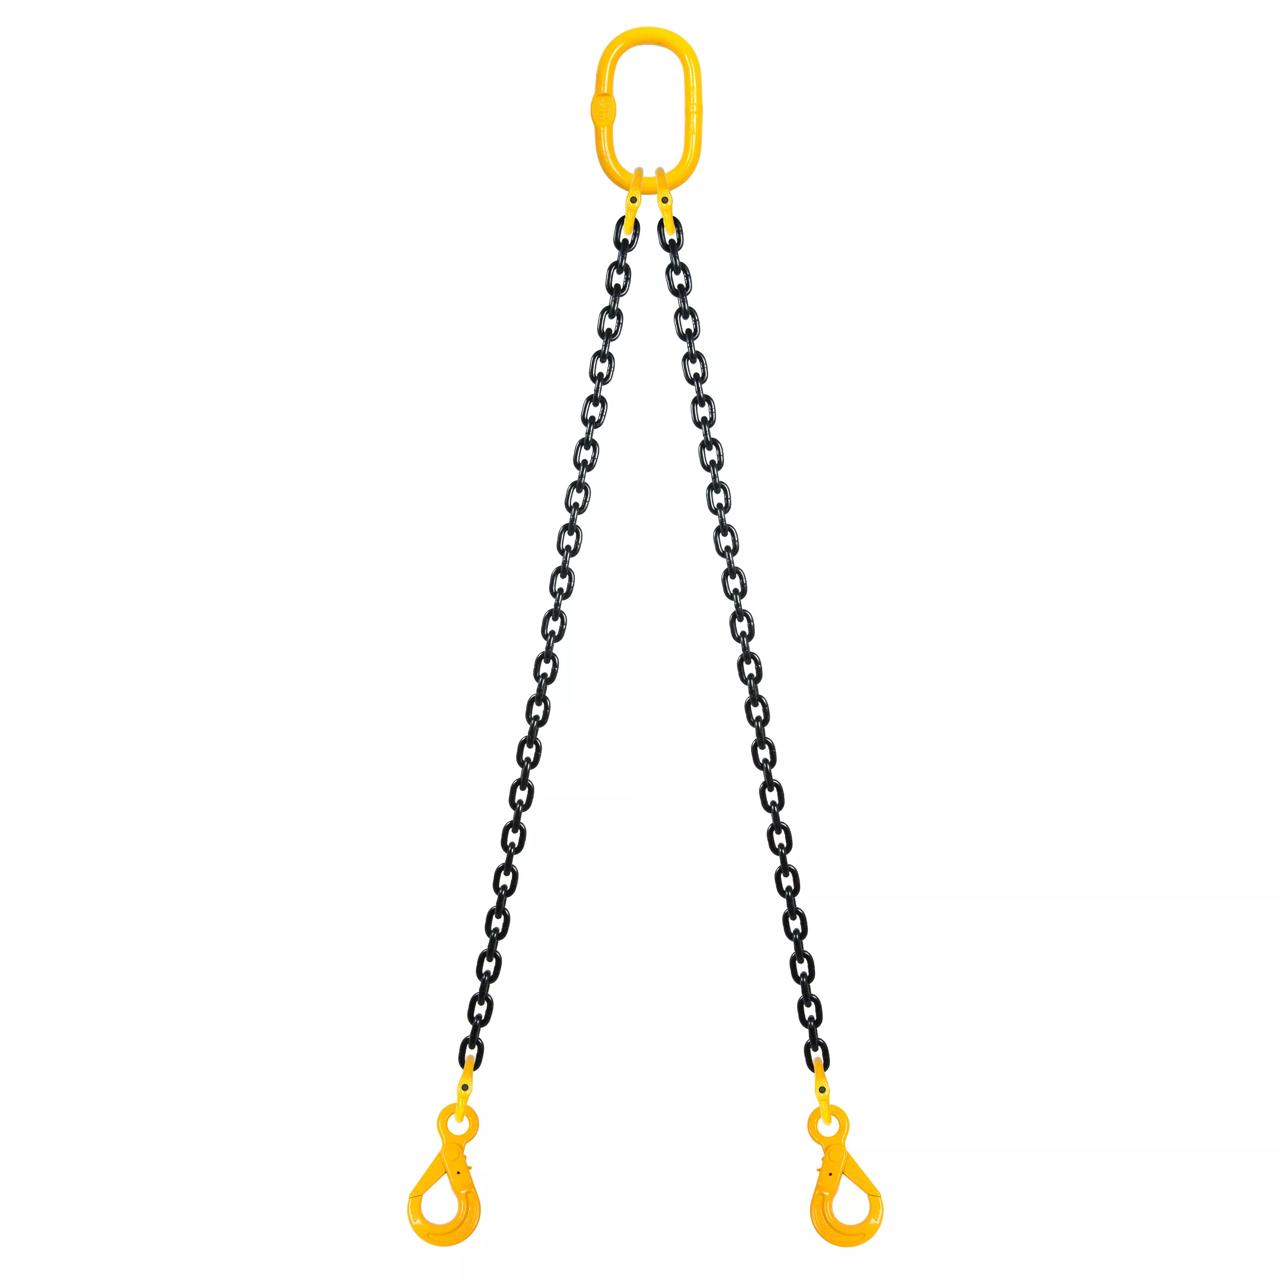 Chain sling 2-part Grade 80,10mm, length 3m, bucket